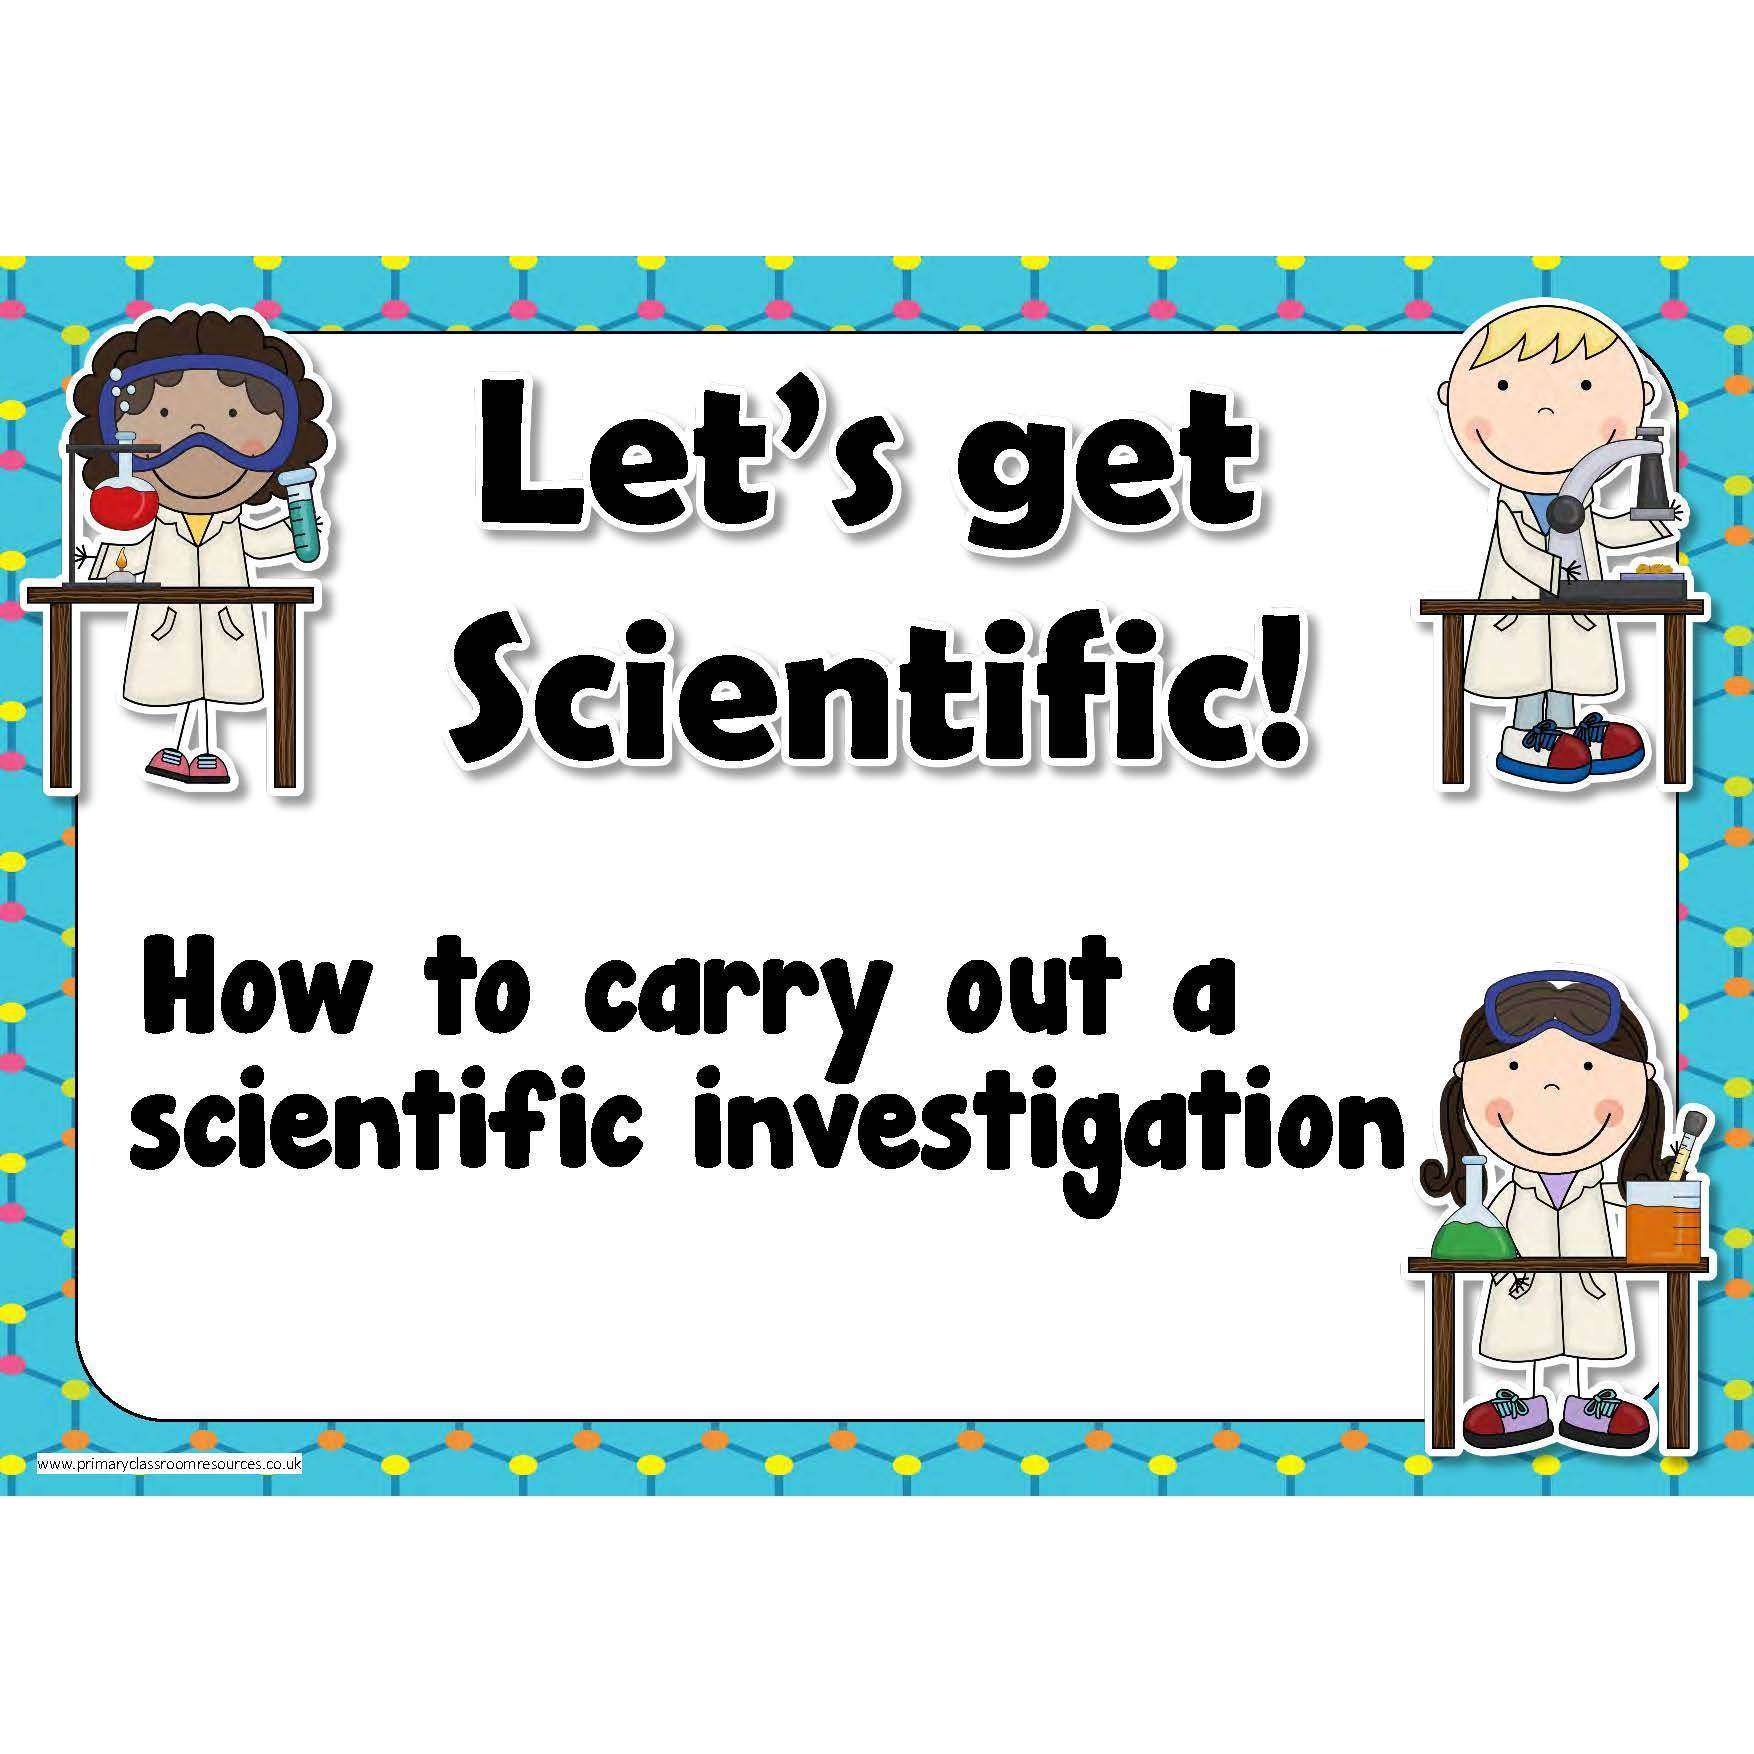 Let's Get Scientific Display Set - Science Investigation:Primary Classroom Resources